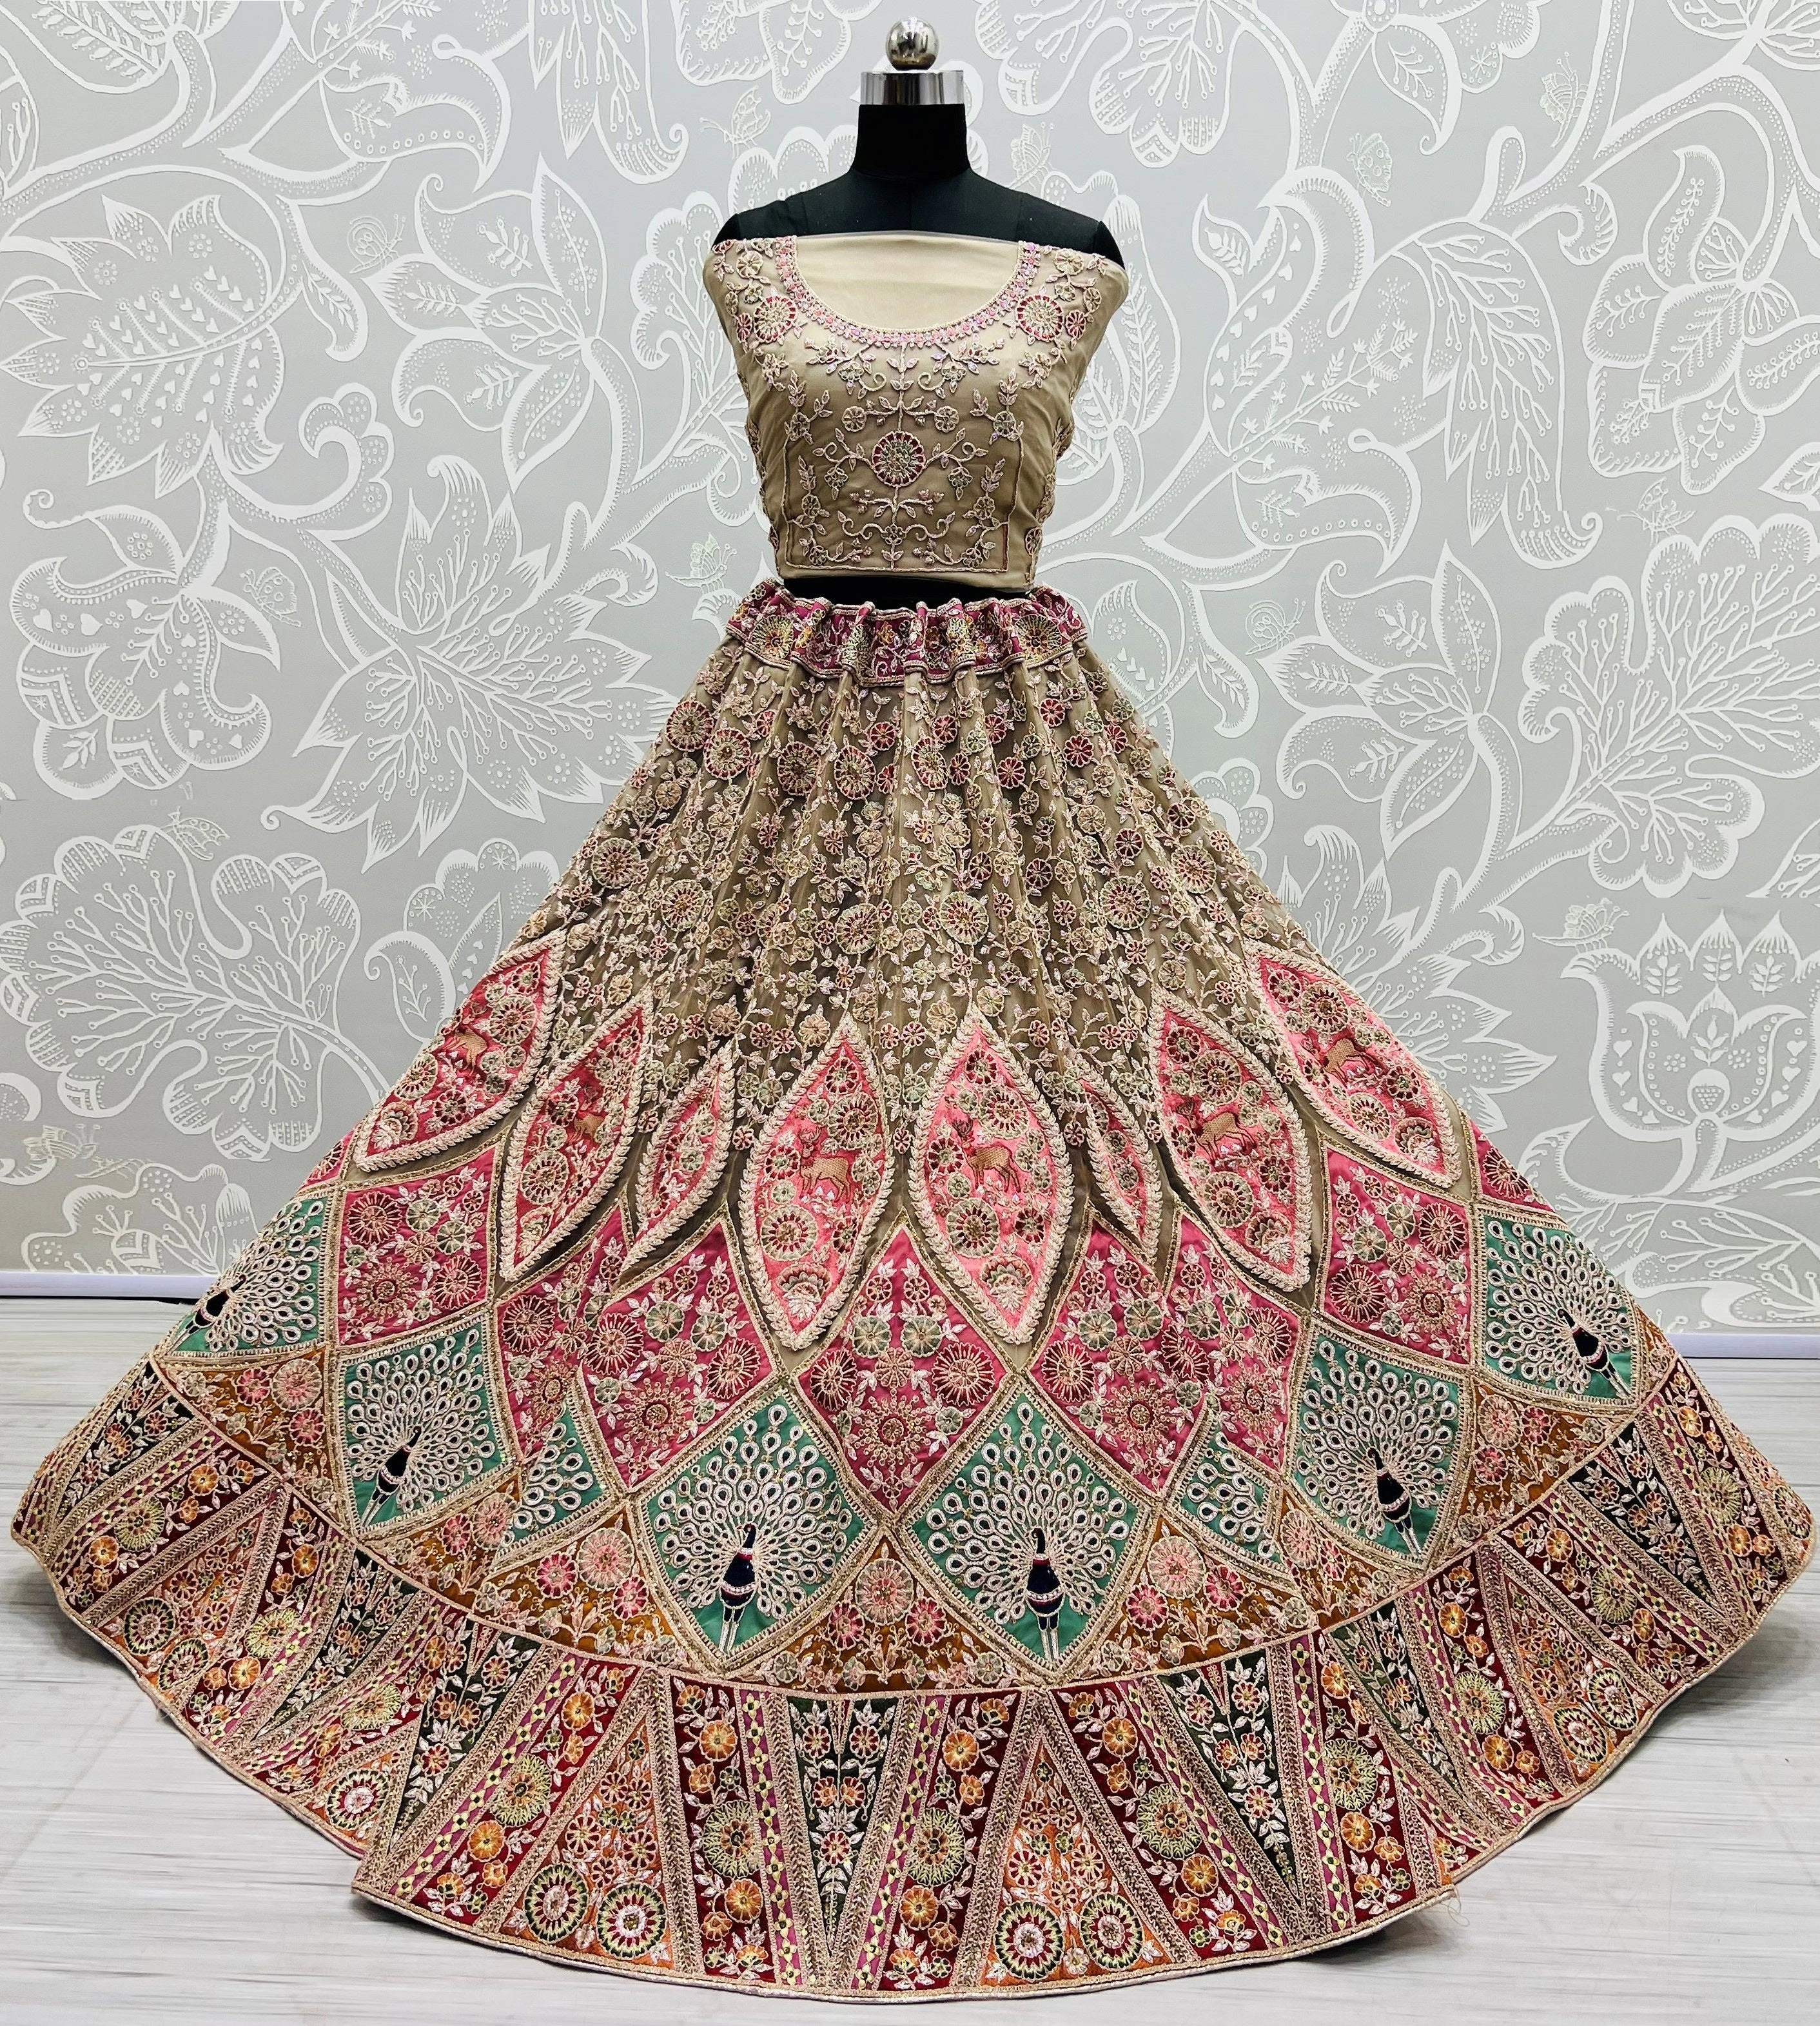 Pink Designer Patchwork Bridal Lehenga Choli - Peacock, Deer &amp; Flower Motifs - Net Fabric -Summer Wedding Outfit,Indian Bridal Lehenga Choli-2